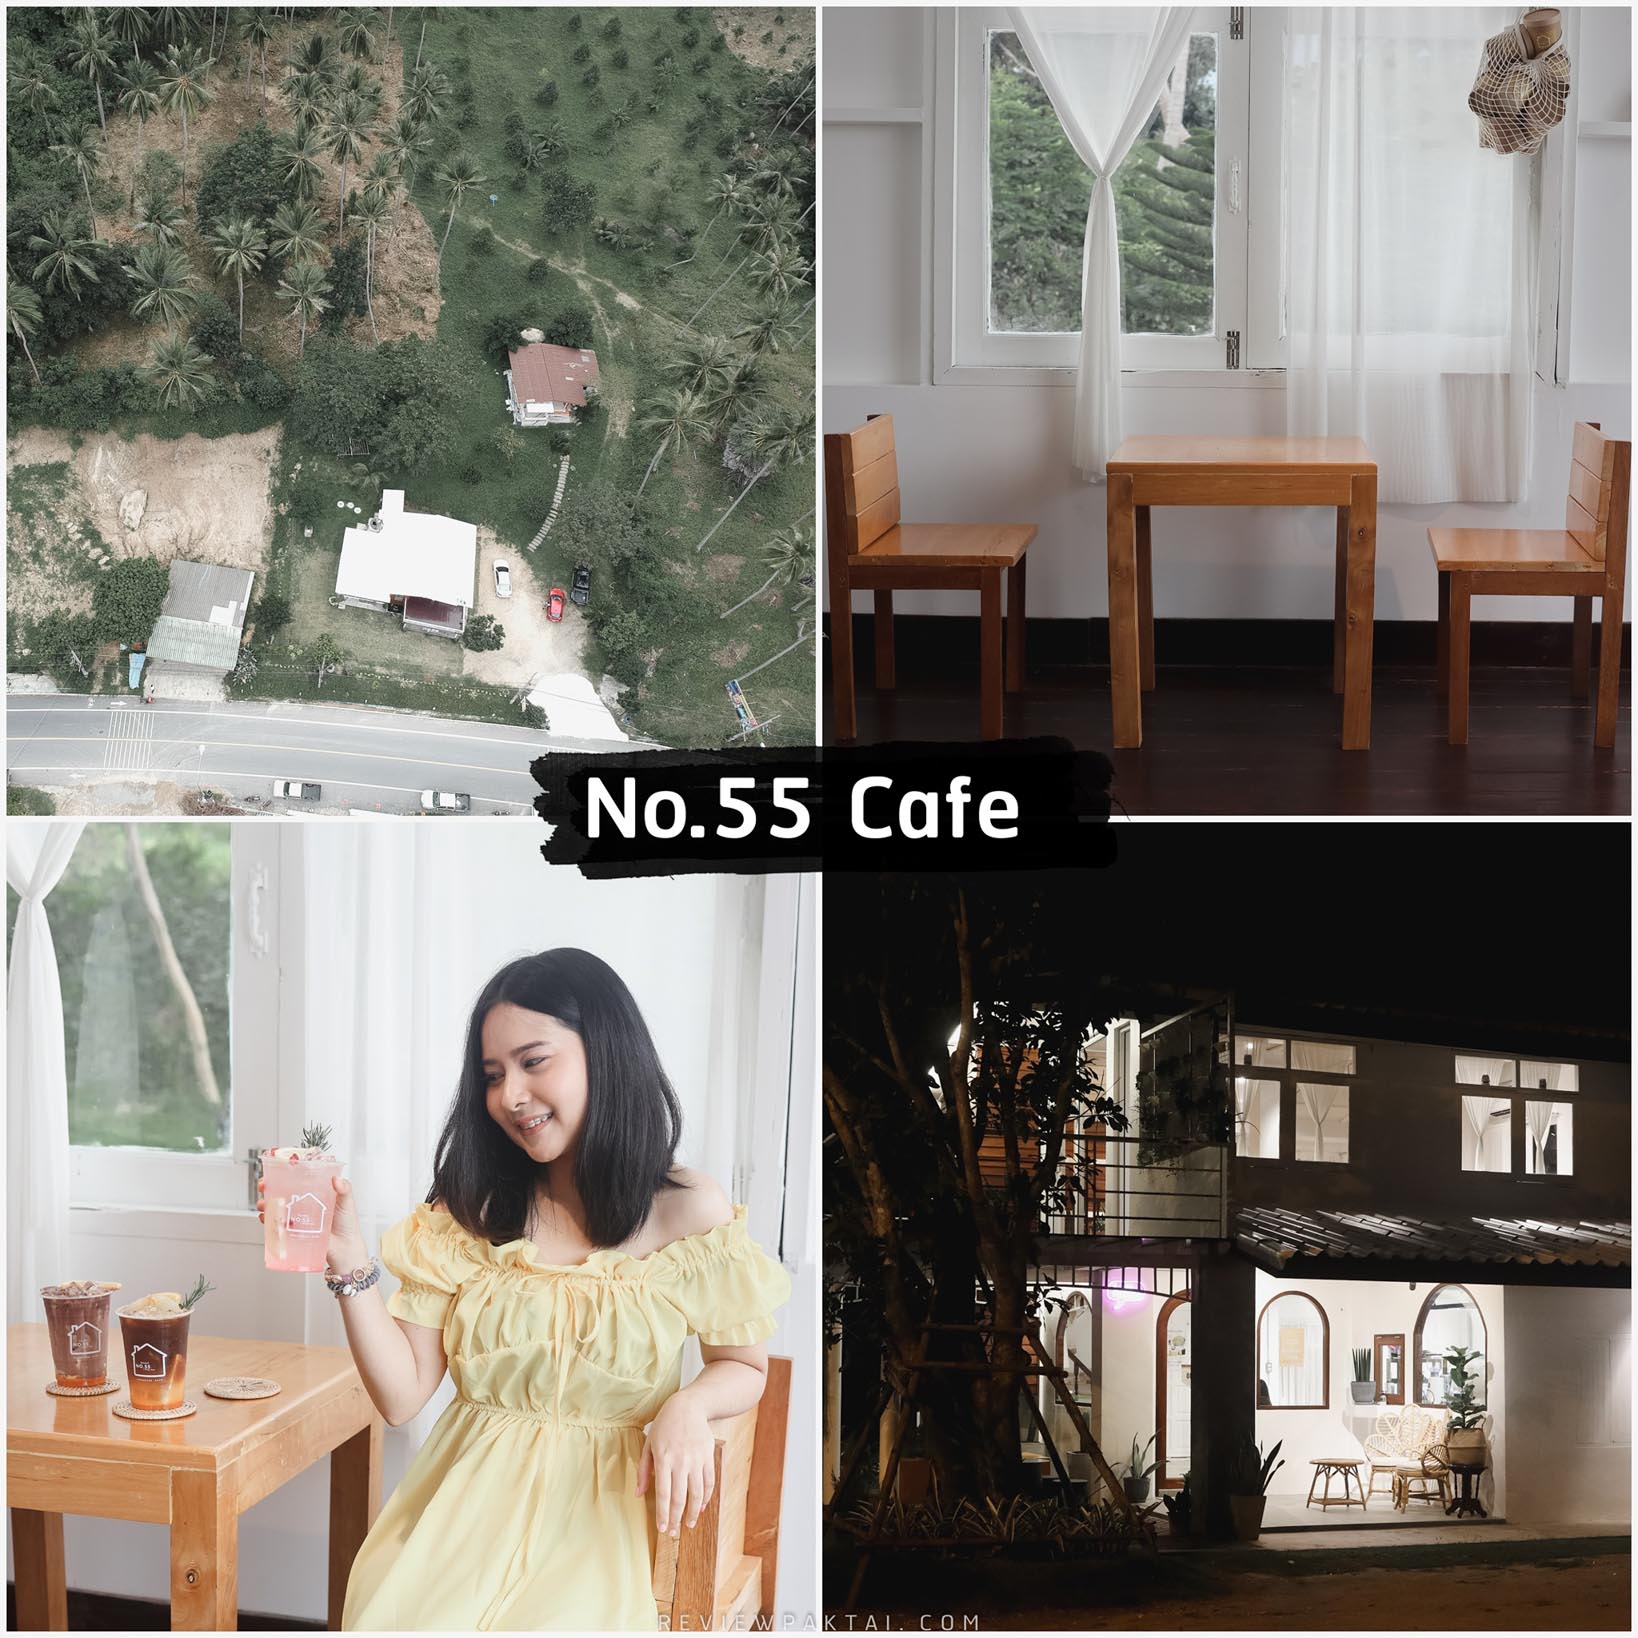 No.55-Cafe -คาเฟ่เปิดใหม่ริมทะเลขนอม-สไตล์มินิมอล-สีขาวล้วนนน-- คาเฟ่,นครศรีธรรมราช,2021,จุดกิน,ของกิน,วิวหลักล้าน,ร้านกาแฟ